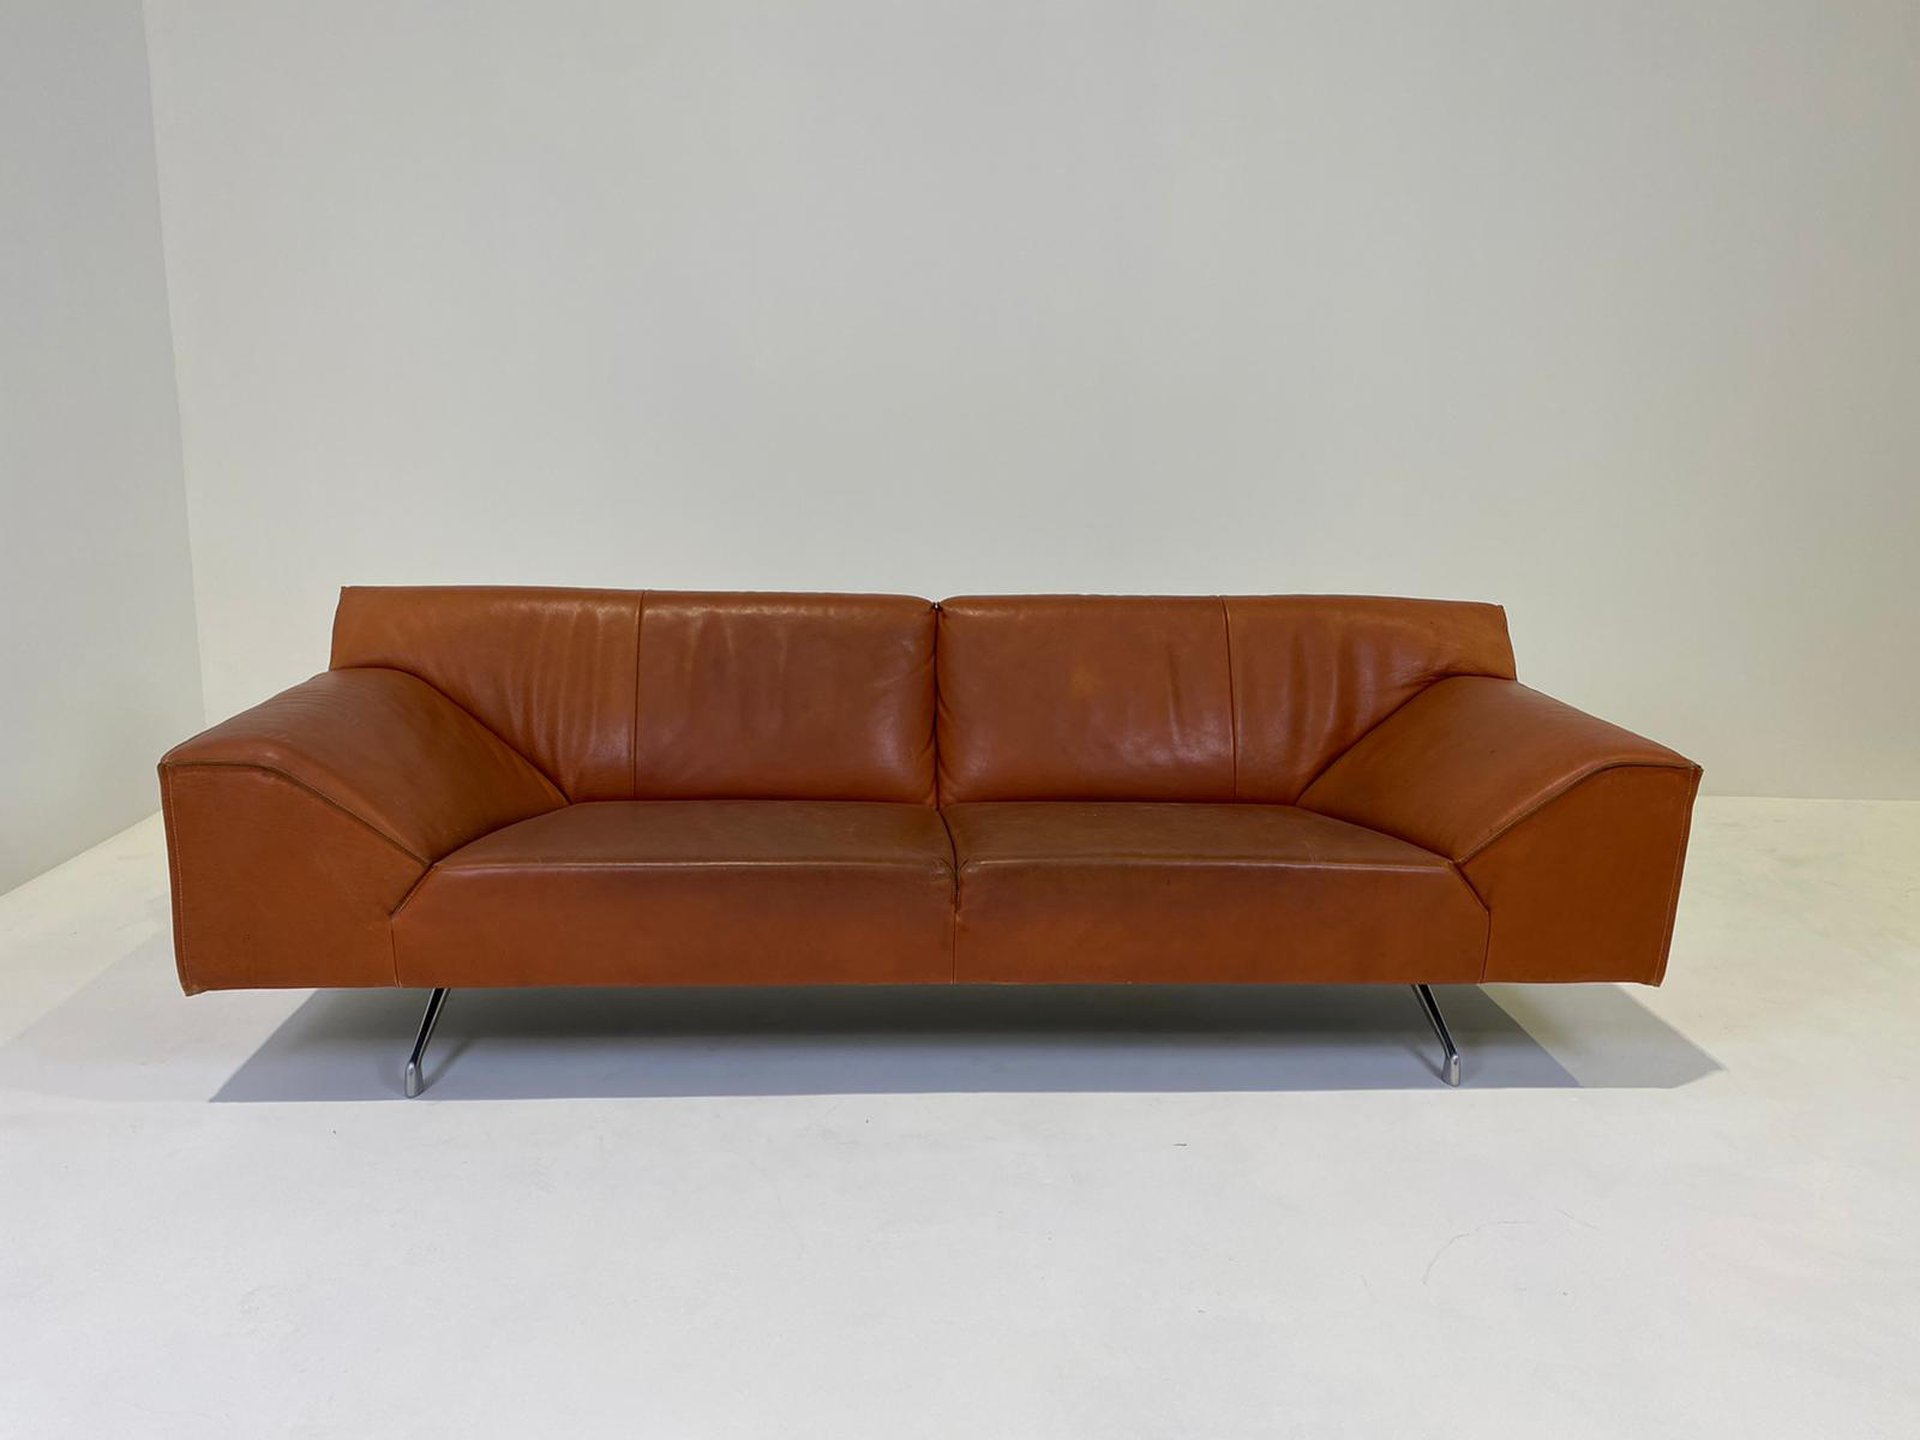 Bacteriën Vrijstelling Thriller Label sofa by Gerard van den Berg | € 850 | Whoppah